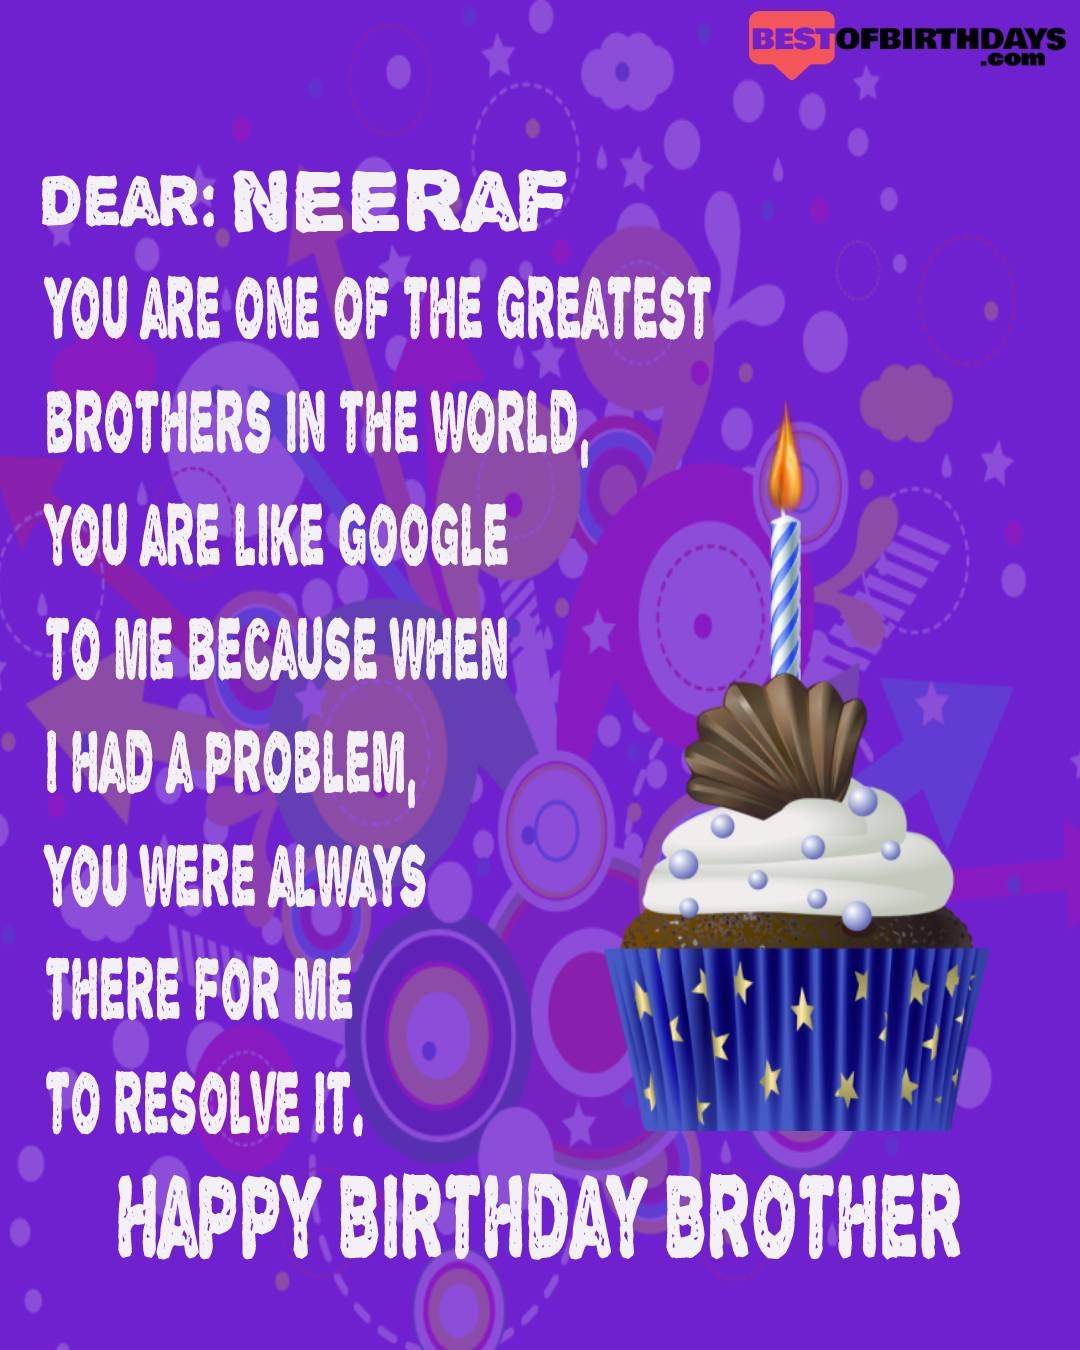 Happy birthday neeraf bhai brother bro